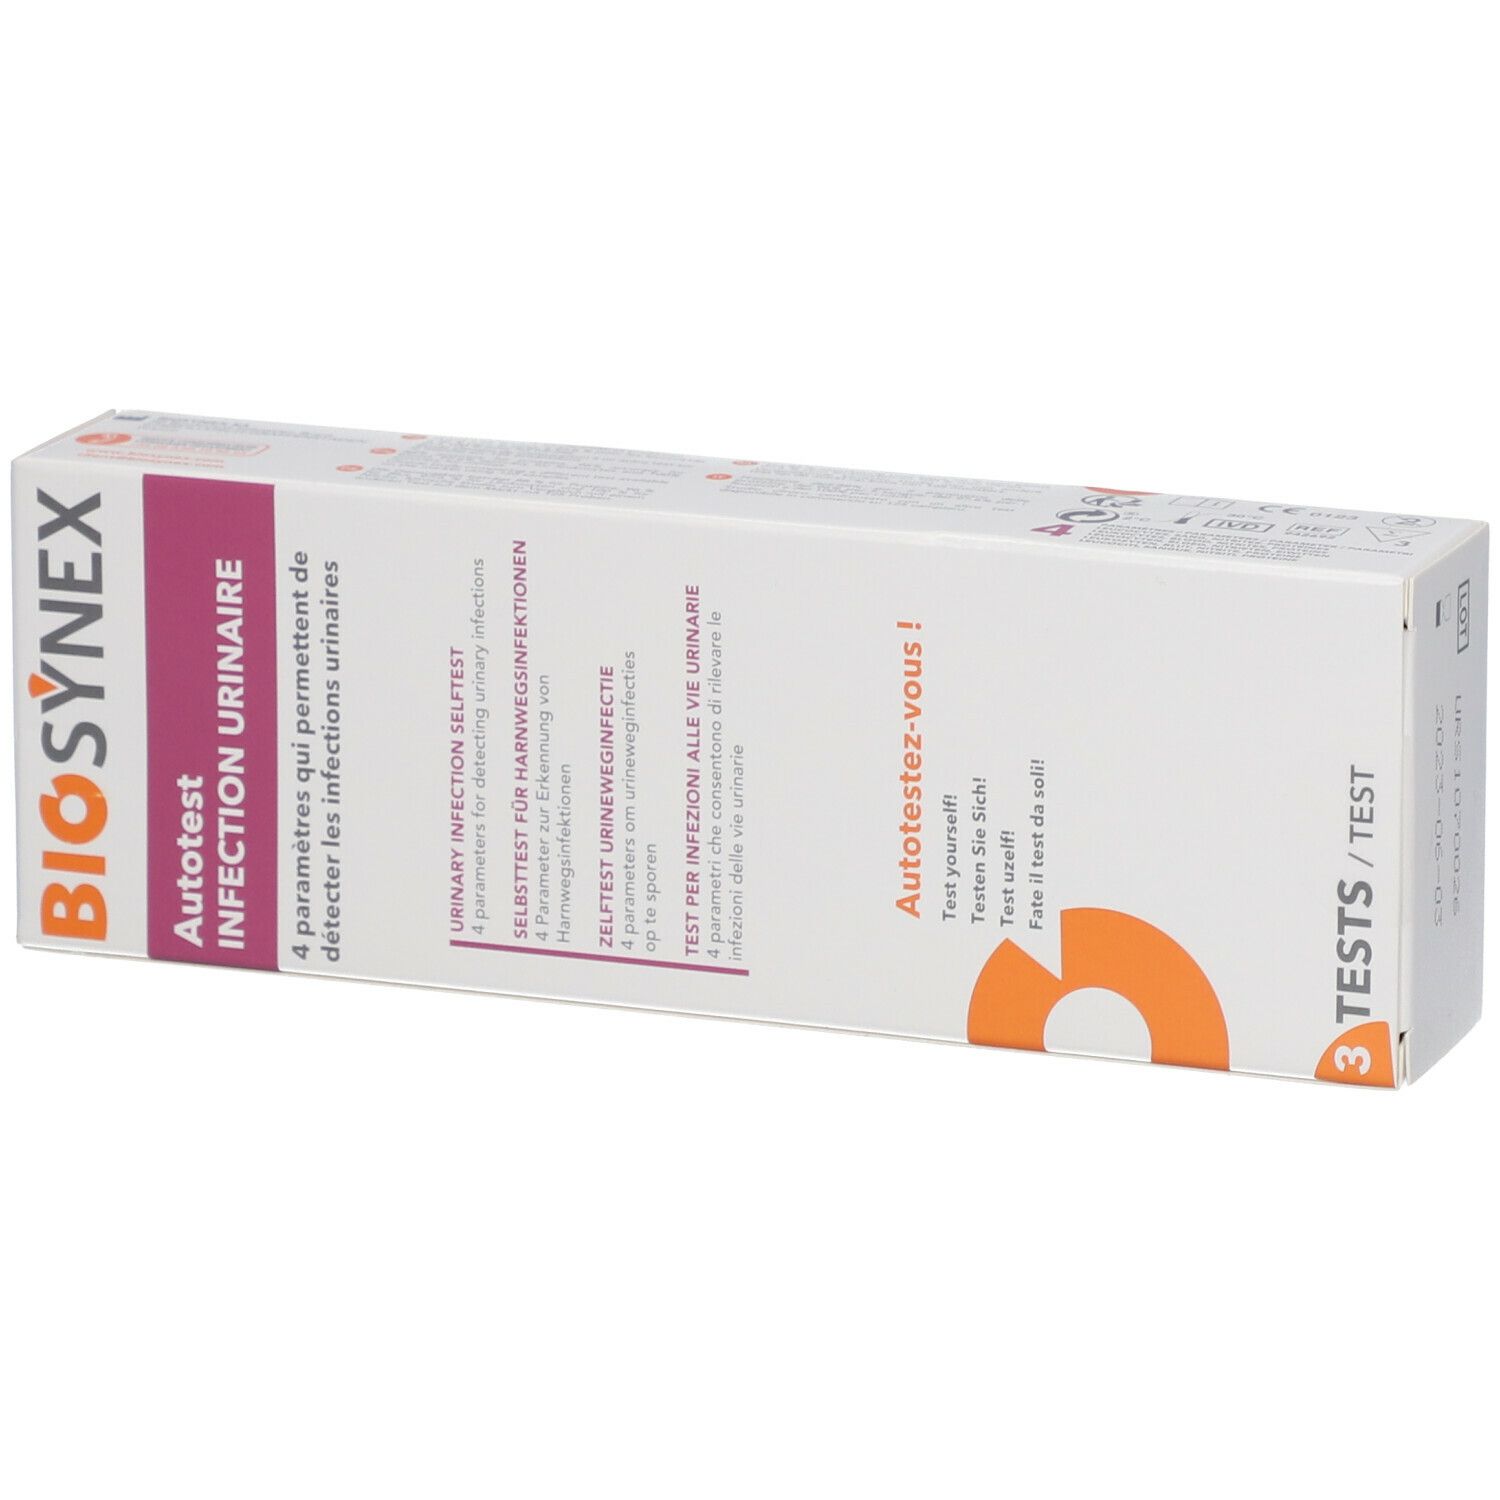 BIOSYNEX - Test Bandelettes Infections Urinaires Exacto à 7,25 €